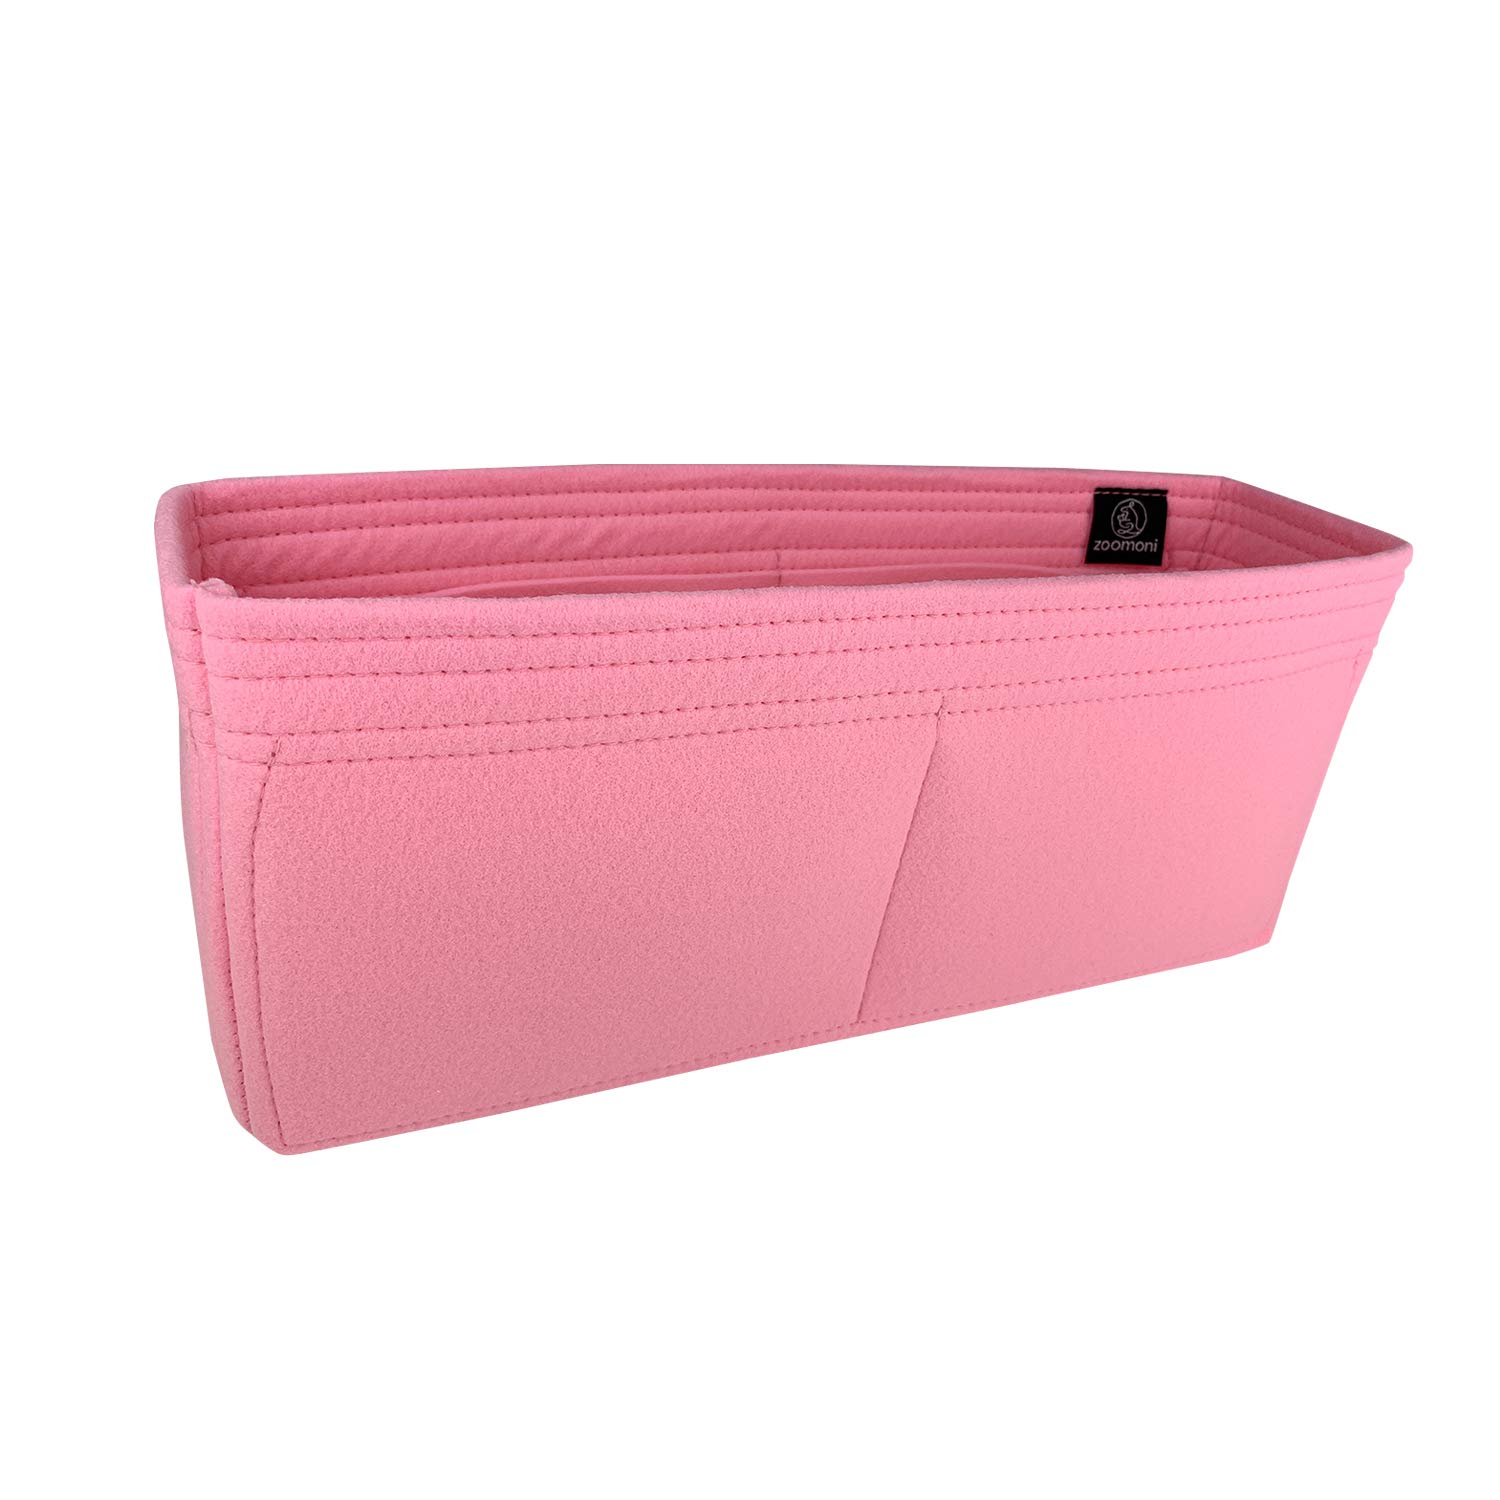 Zoomoni 19 Flap Small Bag Insert Organizer - Premium Felt (Handmade/20 Colors)